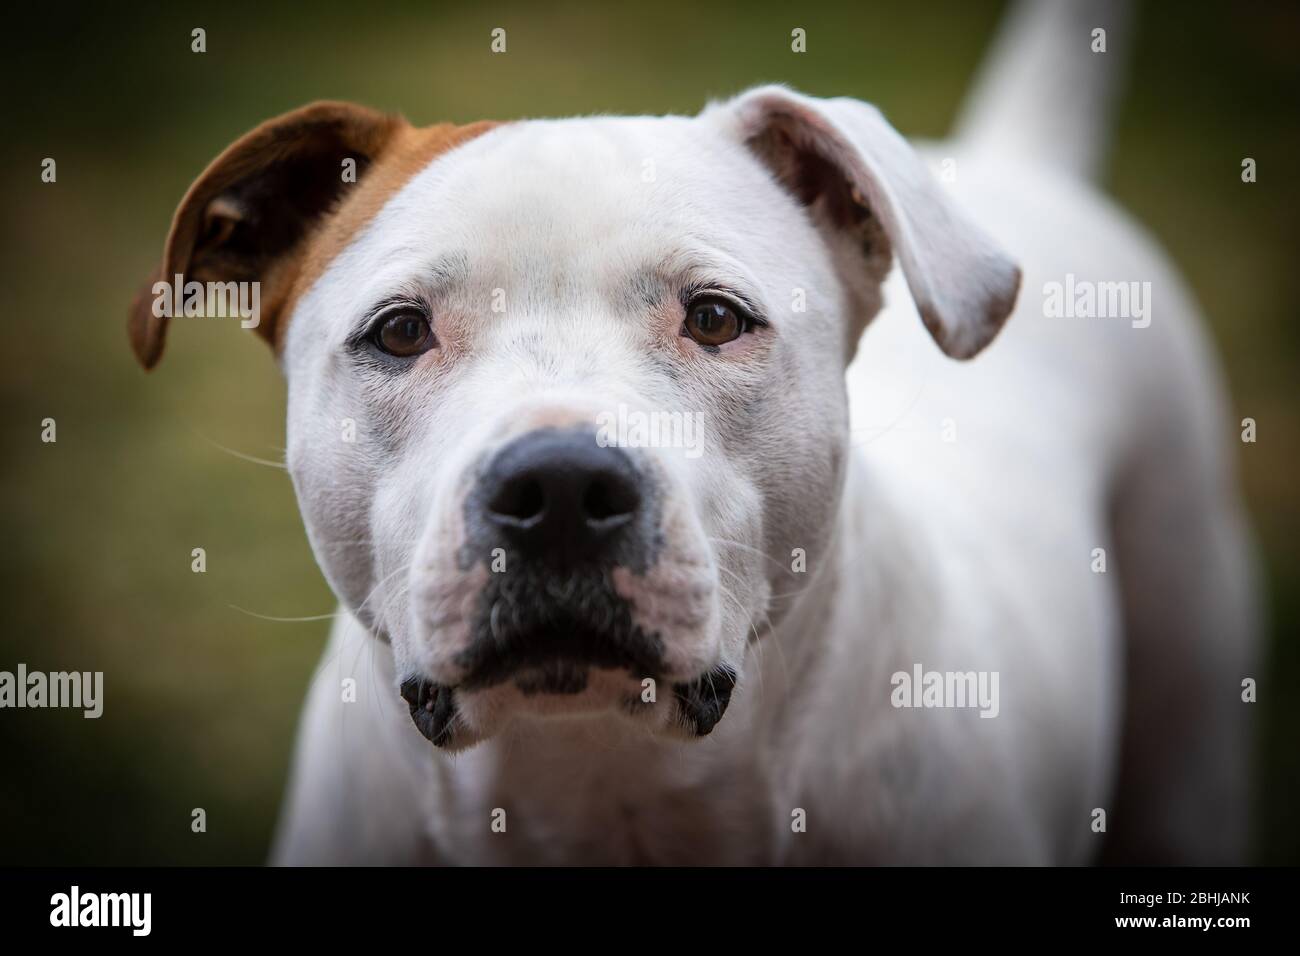 Facial portrait of an Bulldog / Staffordshire Bull Terrier Cross Alamy